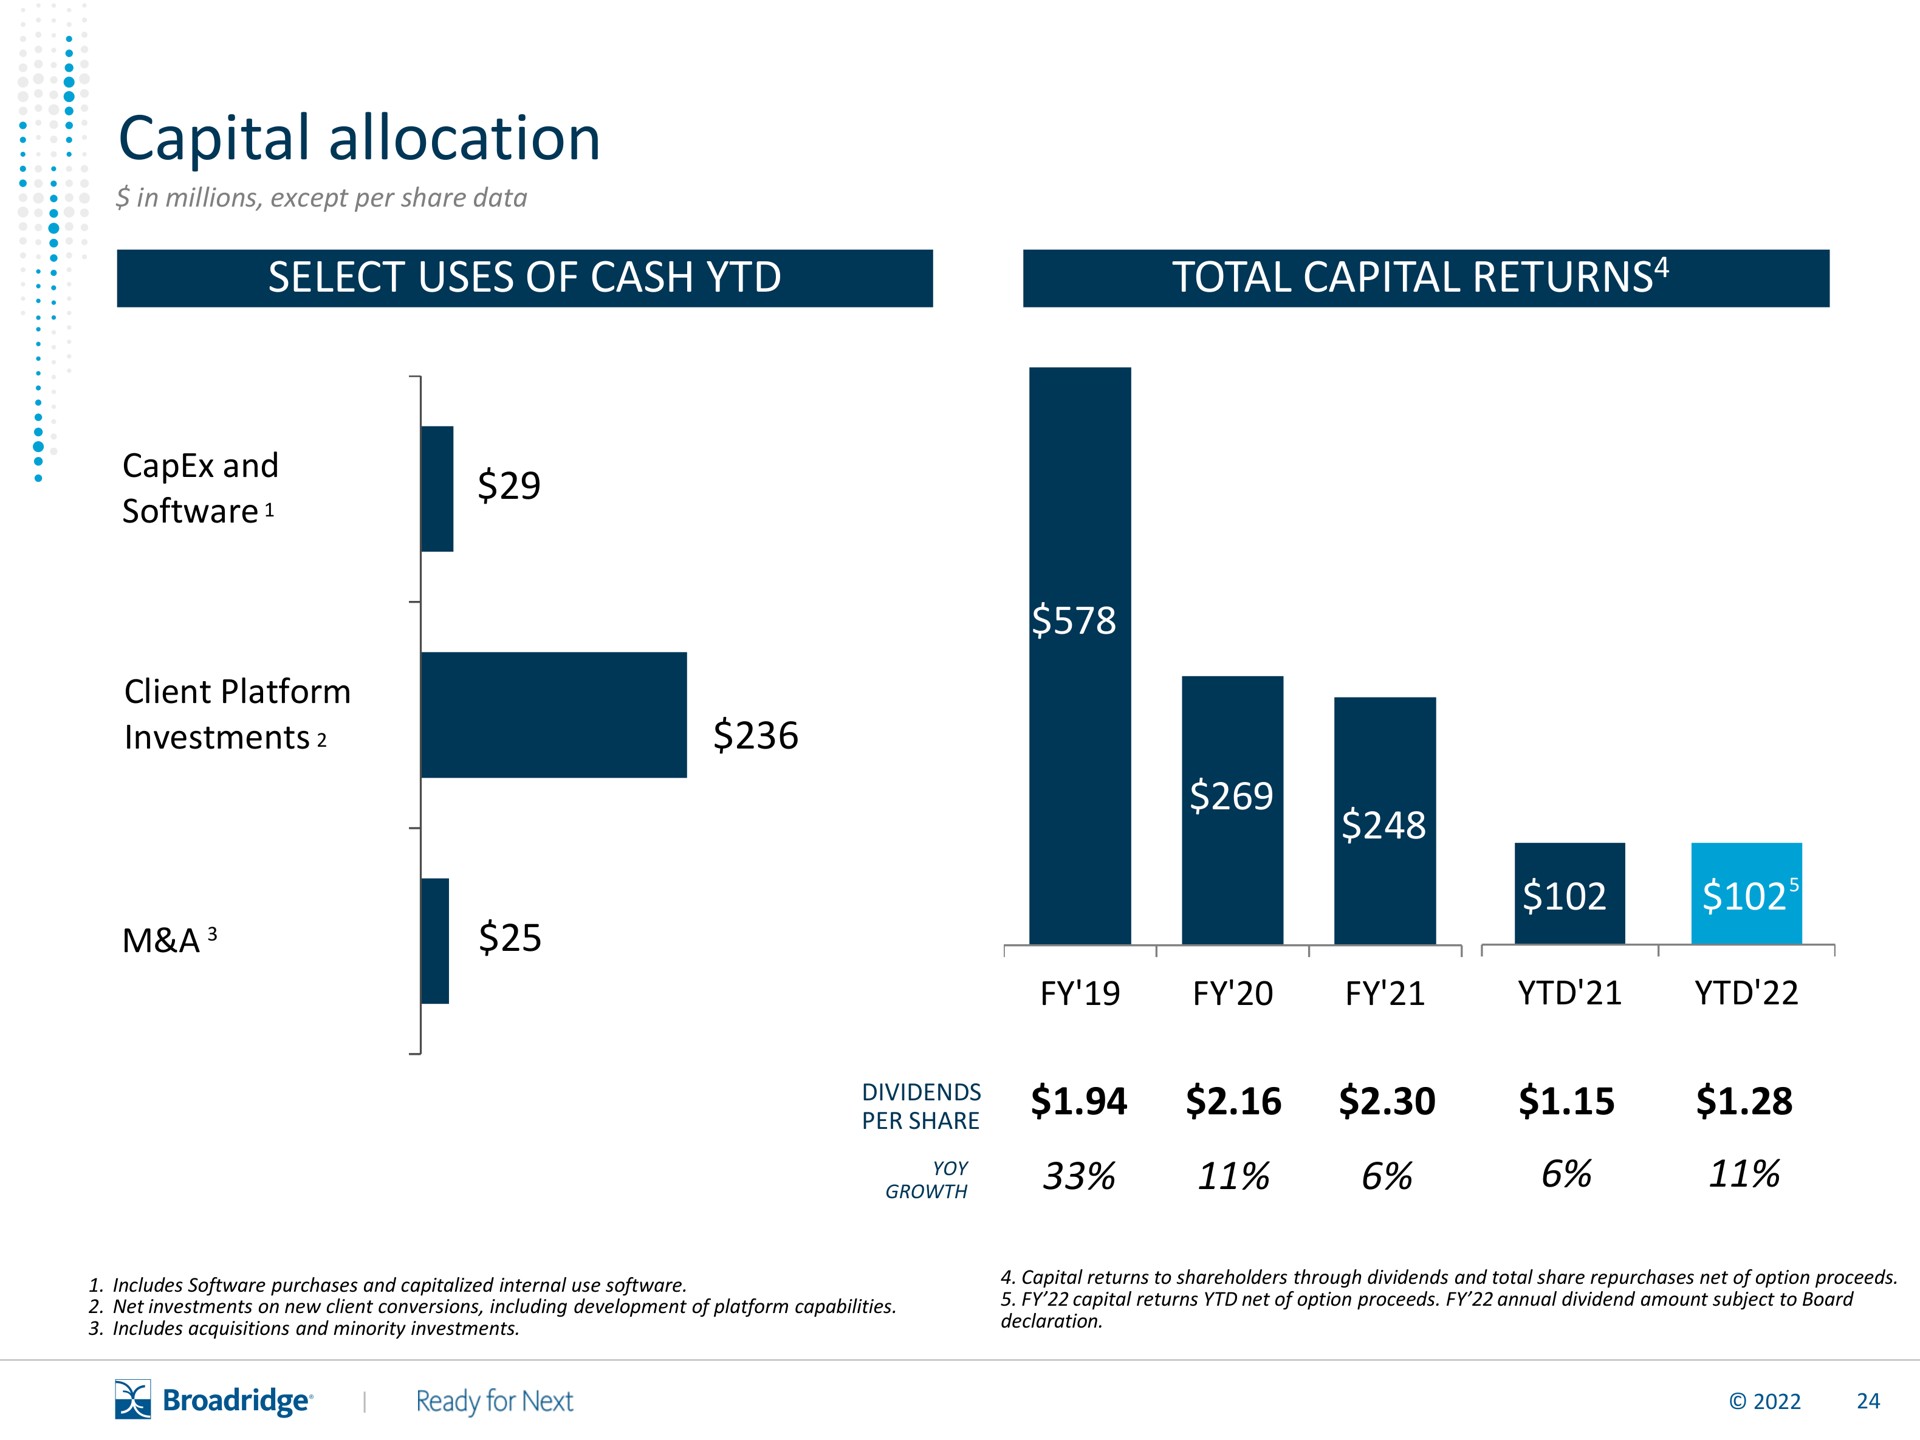 capital allocation dividends | Broadridge Financial Solutions